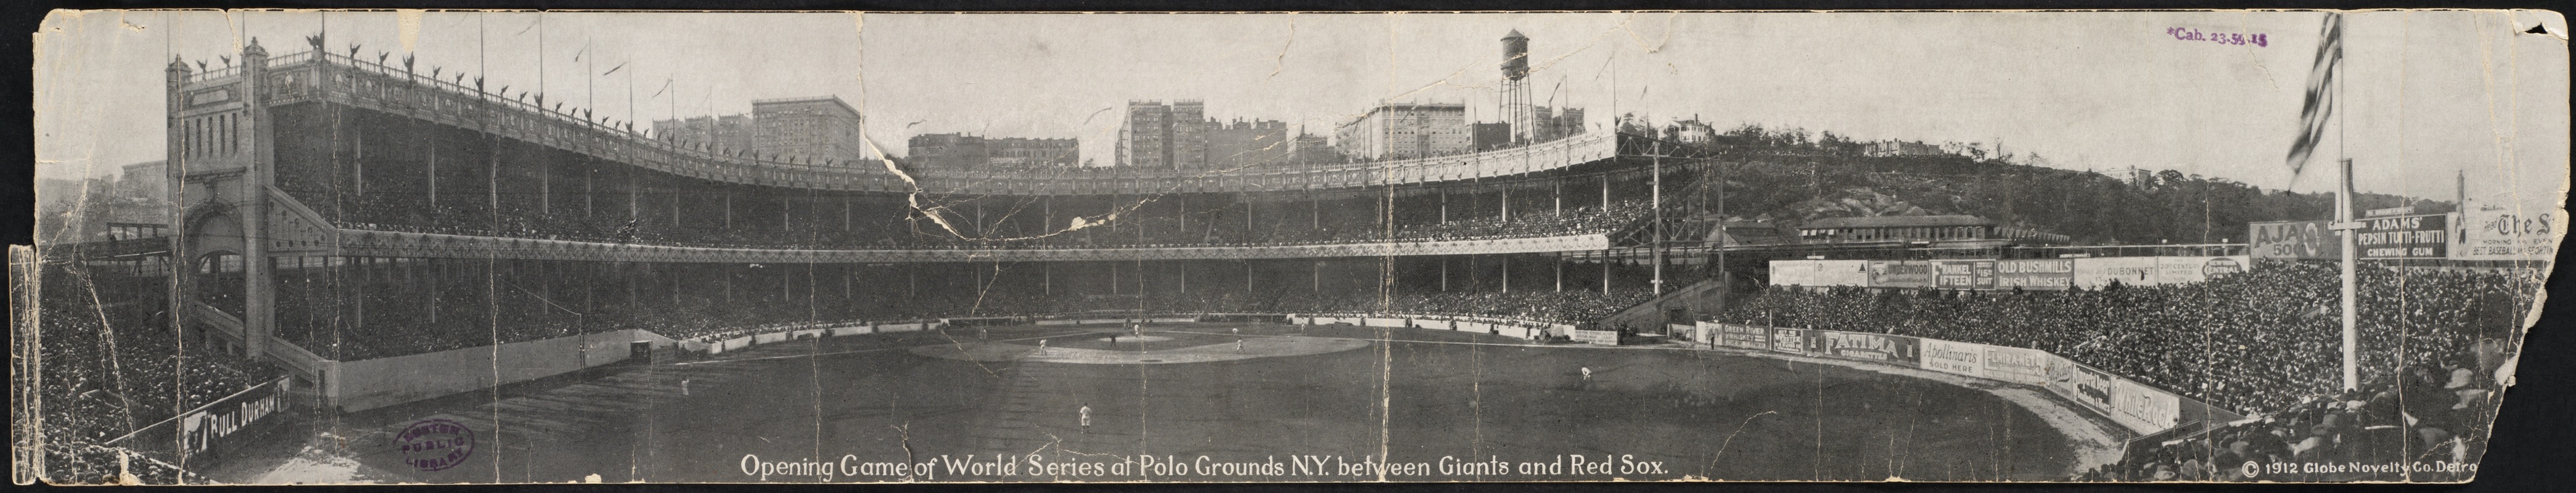 Polo Grounds, 1912 World Series